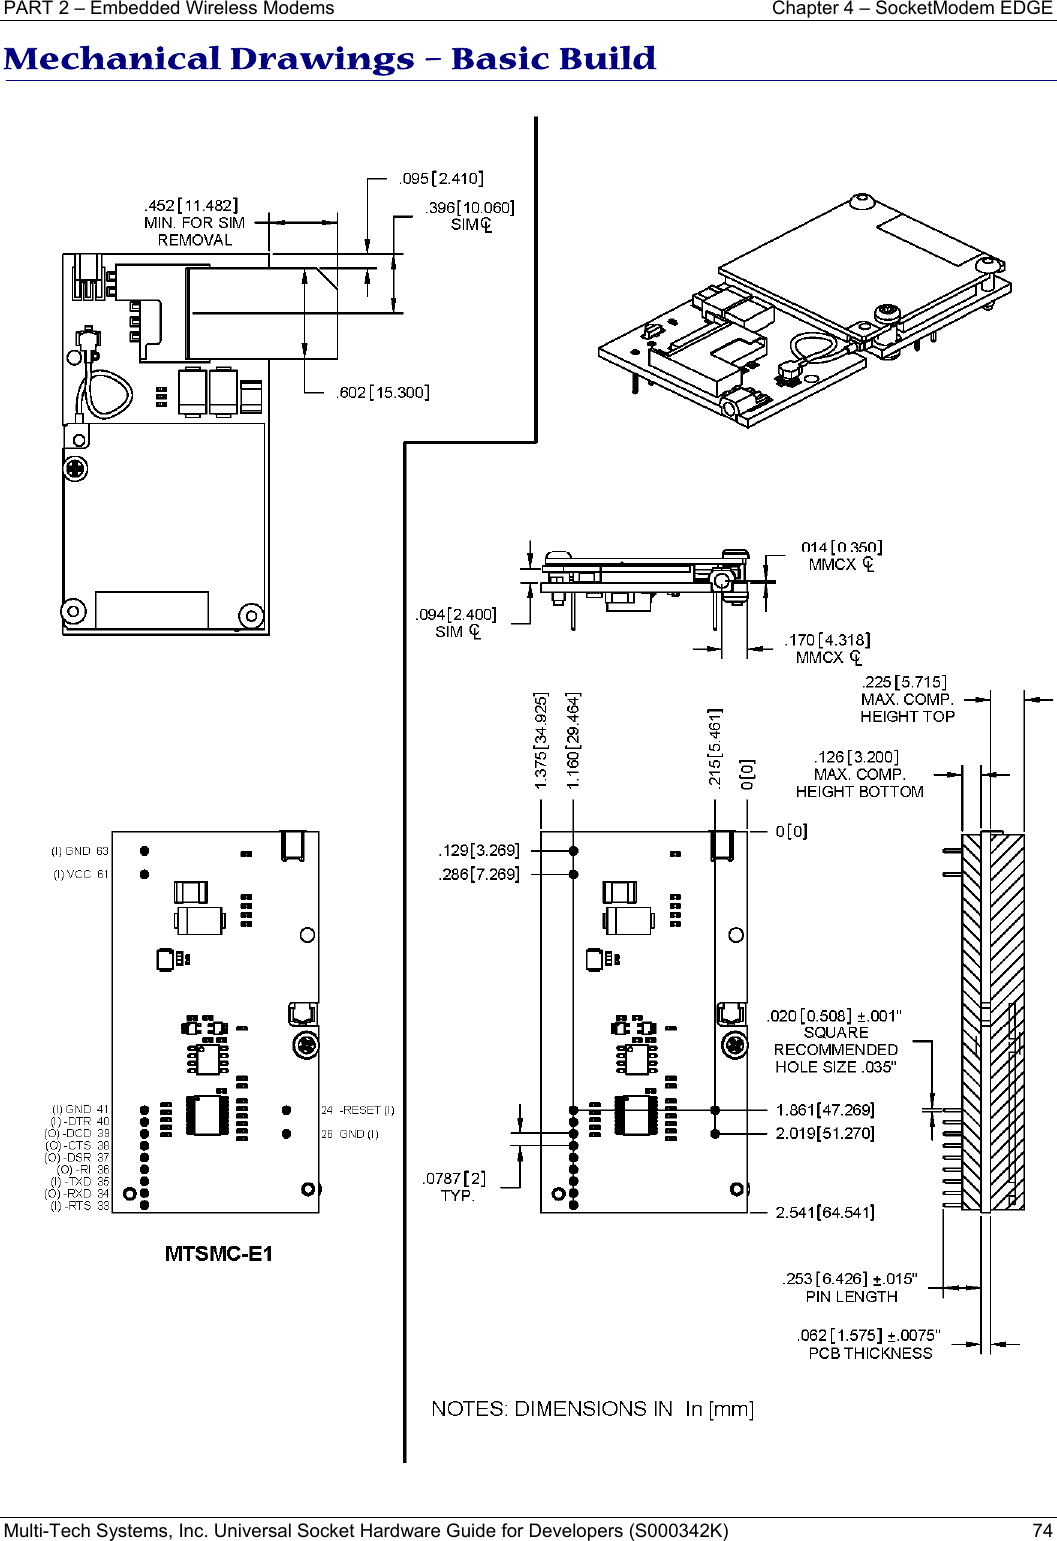 PART 2 – Embedded Wireless Modems  Chapter 4 – SocketModem EDGE Multi-Tech Systems, Inc. Universal Socket Hardware Guide for Developers (S000342K)  74  Mechanical Drawings – Basic Build  